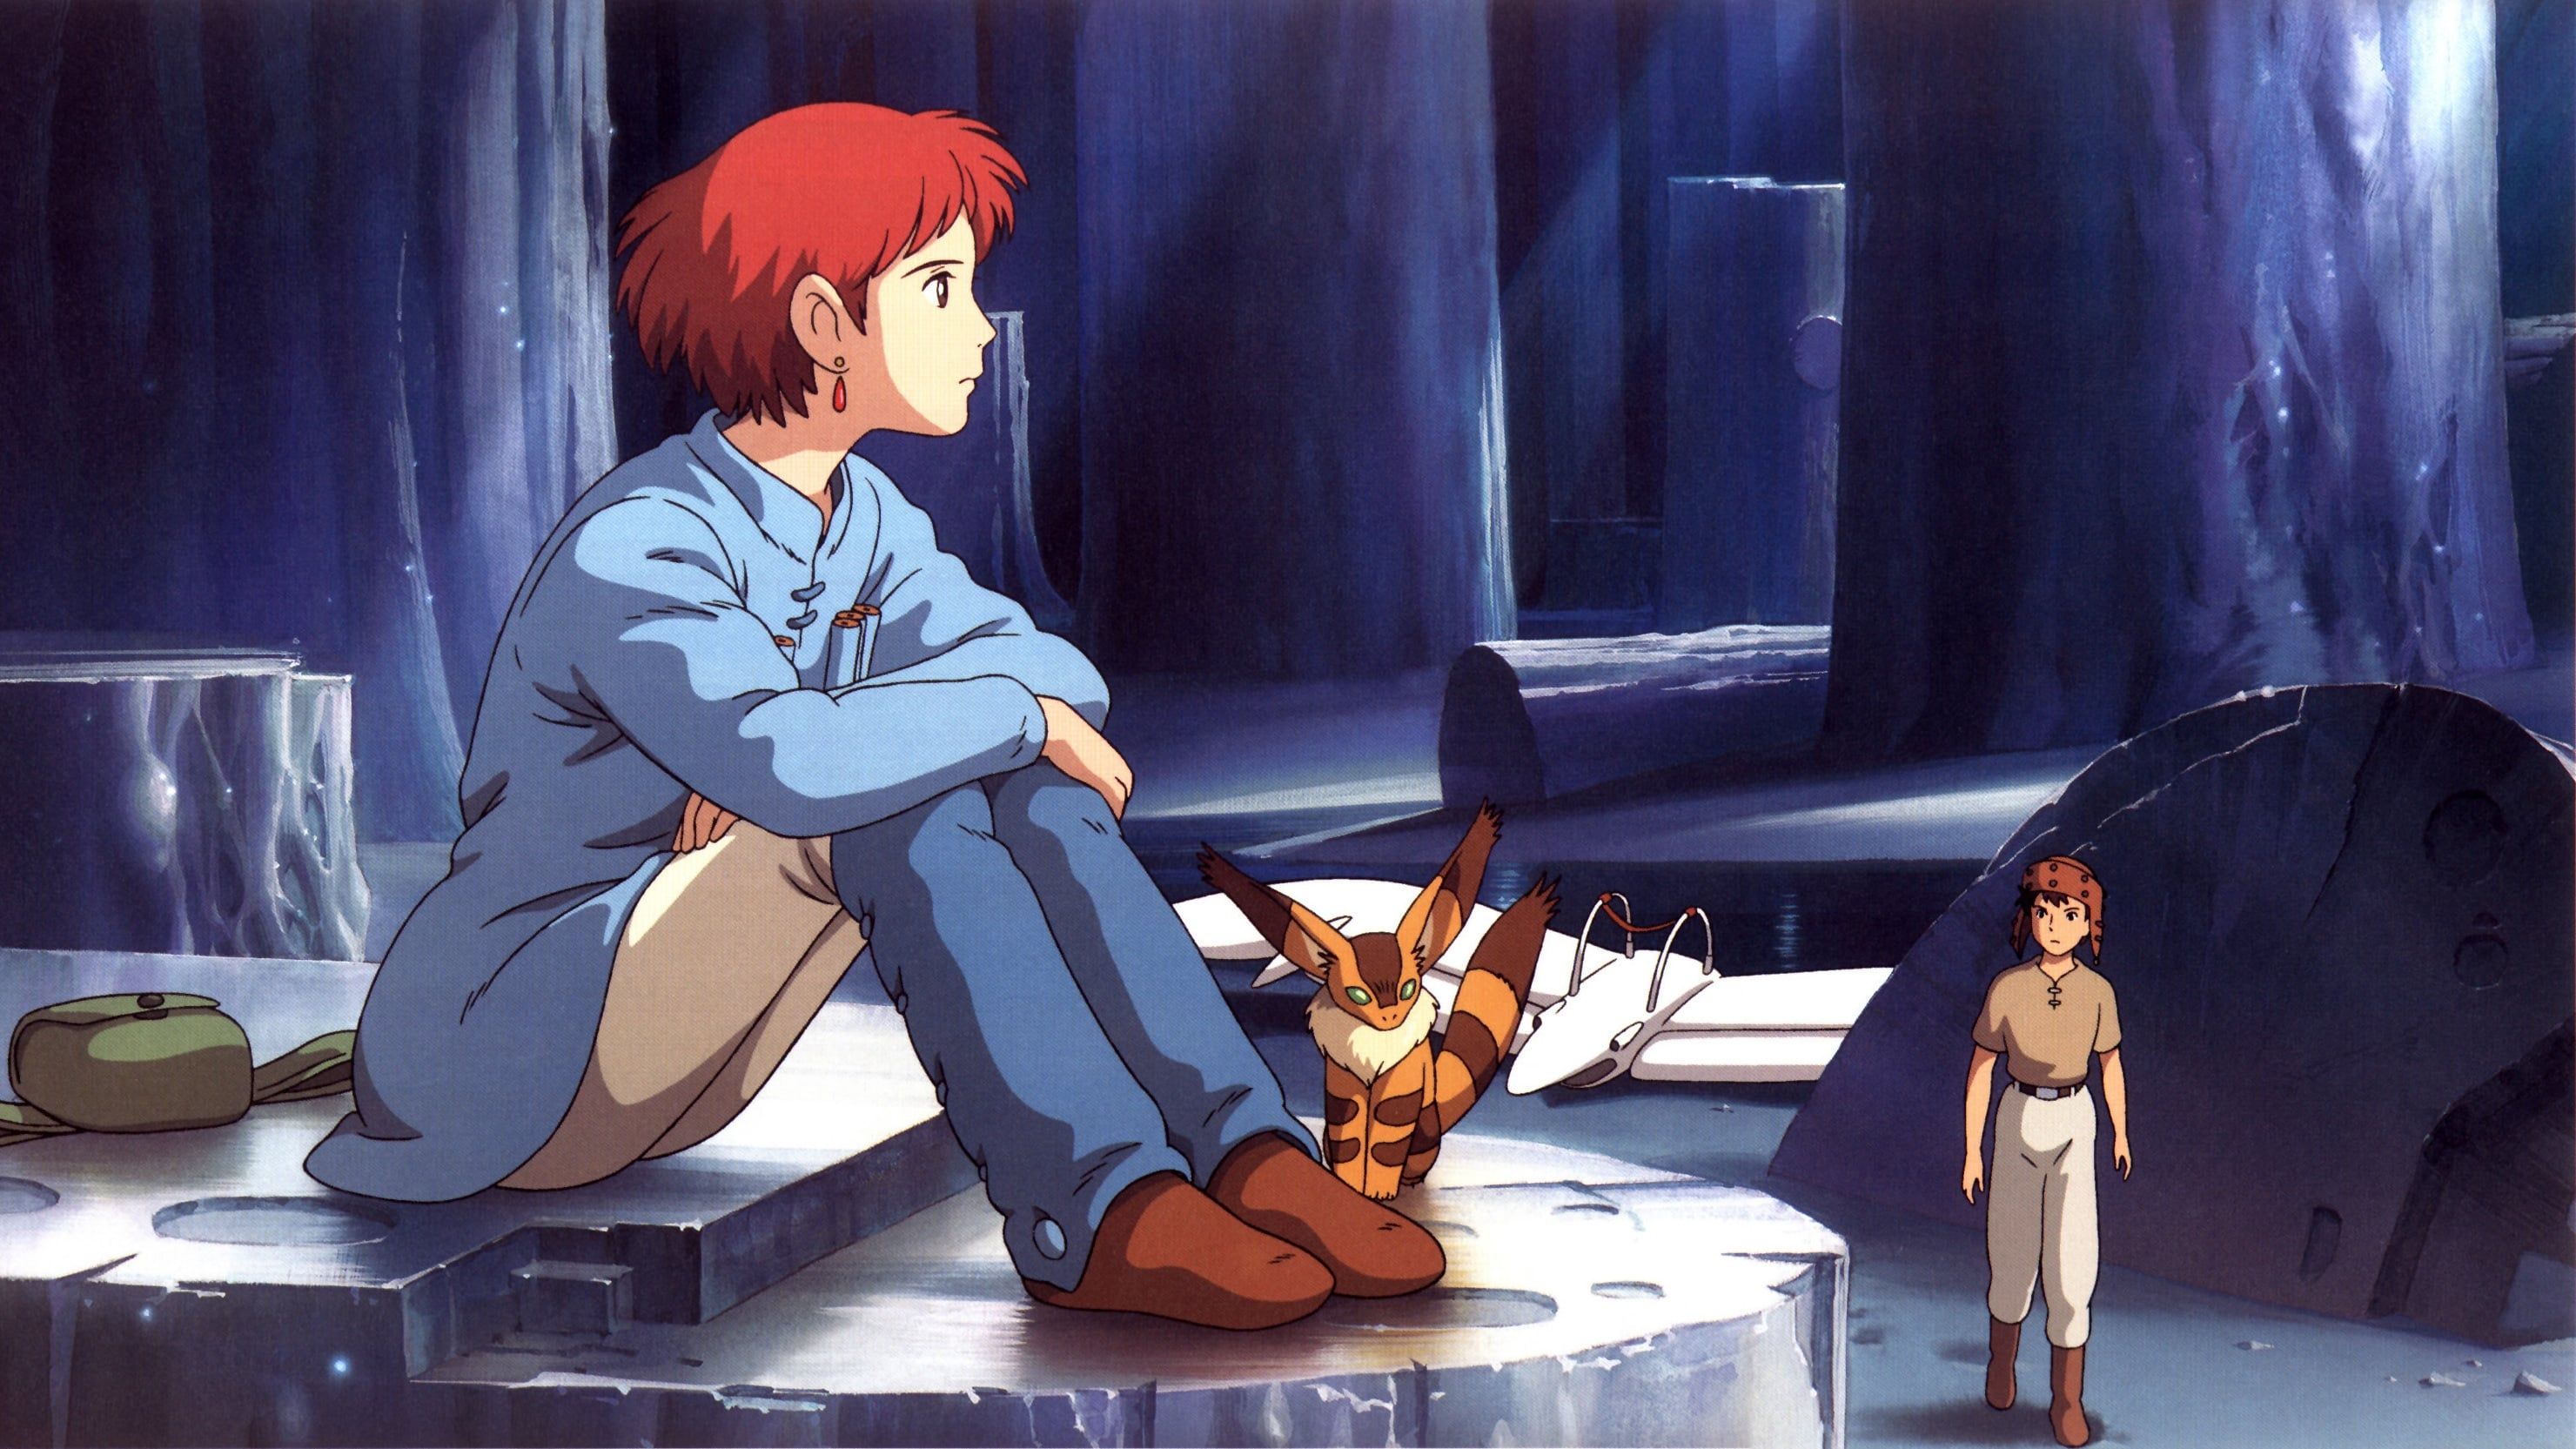 Le film Nausicaä de la vallée du vent - Blog Studio Ghibli